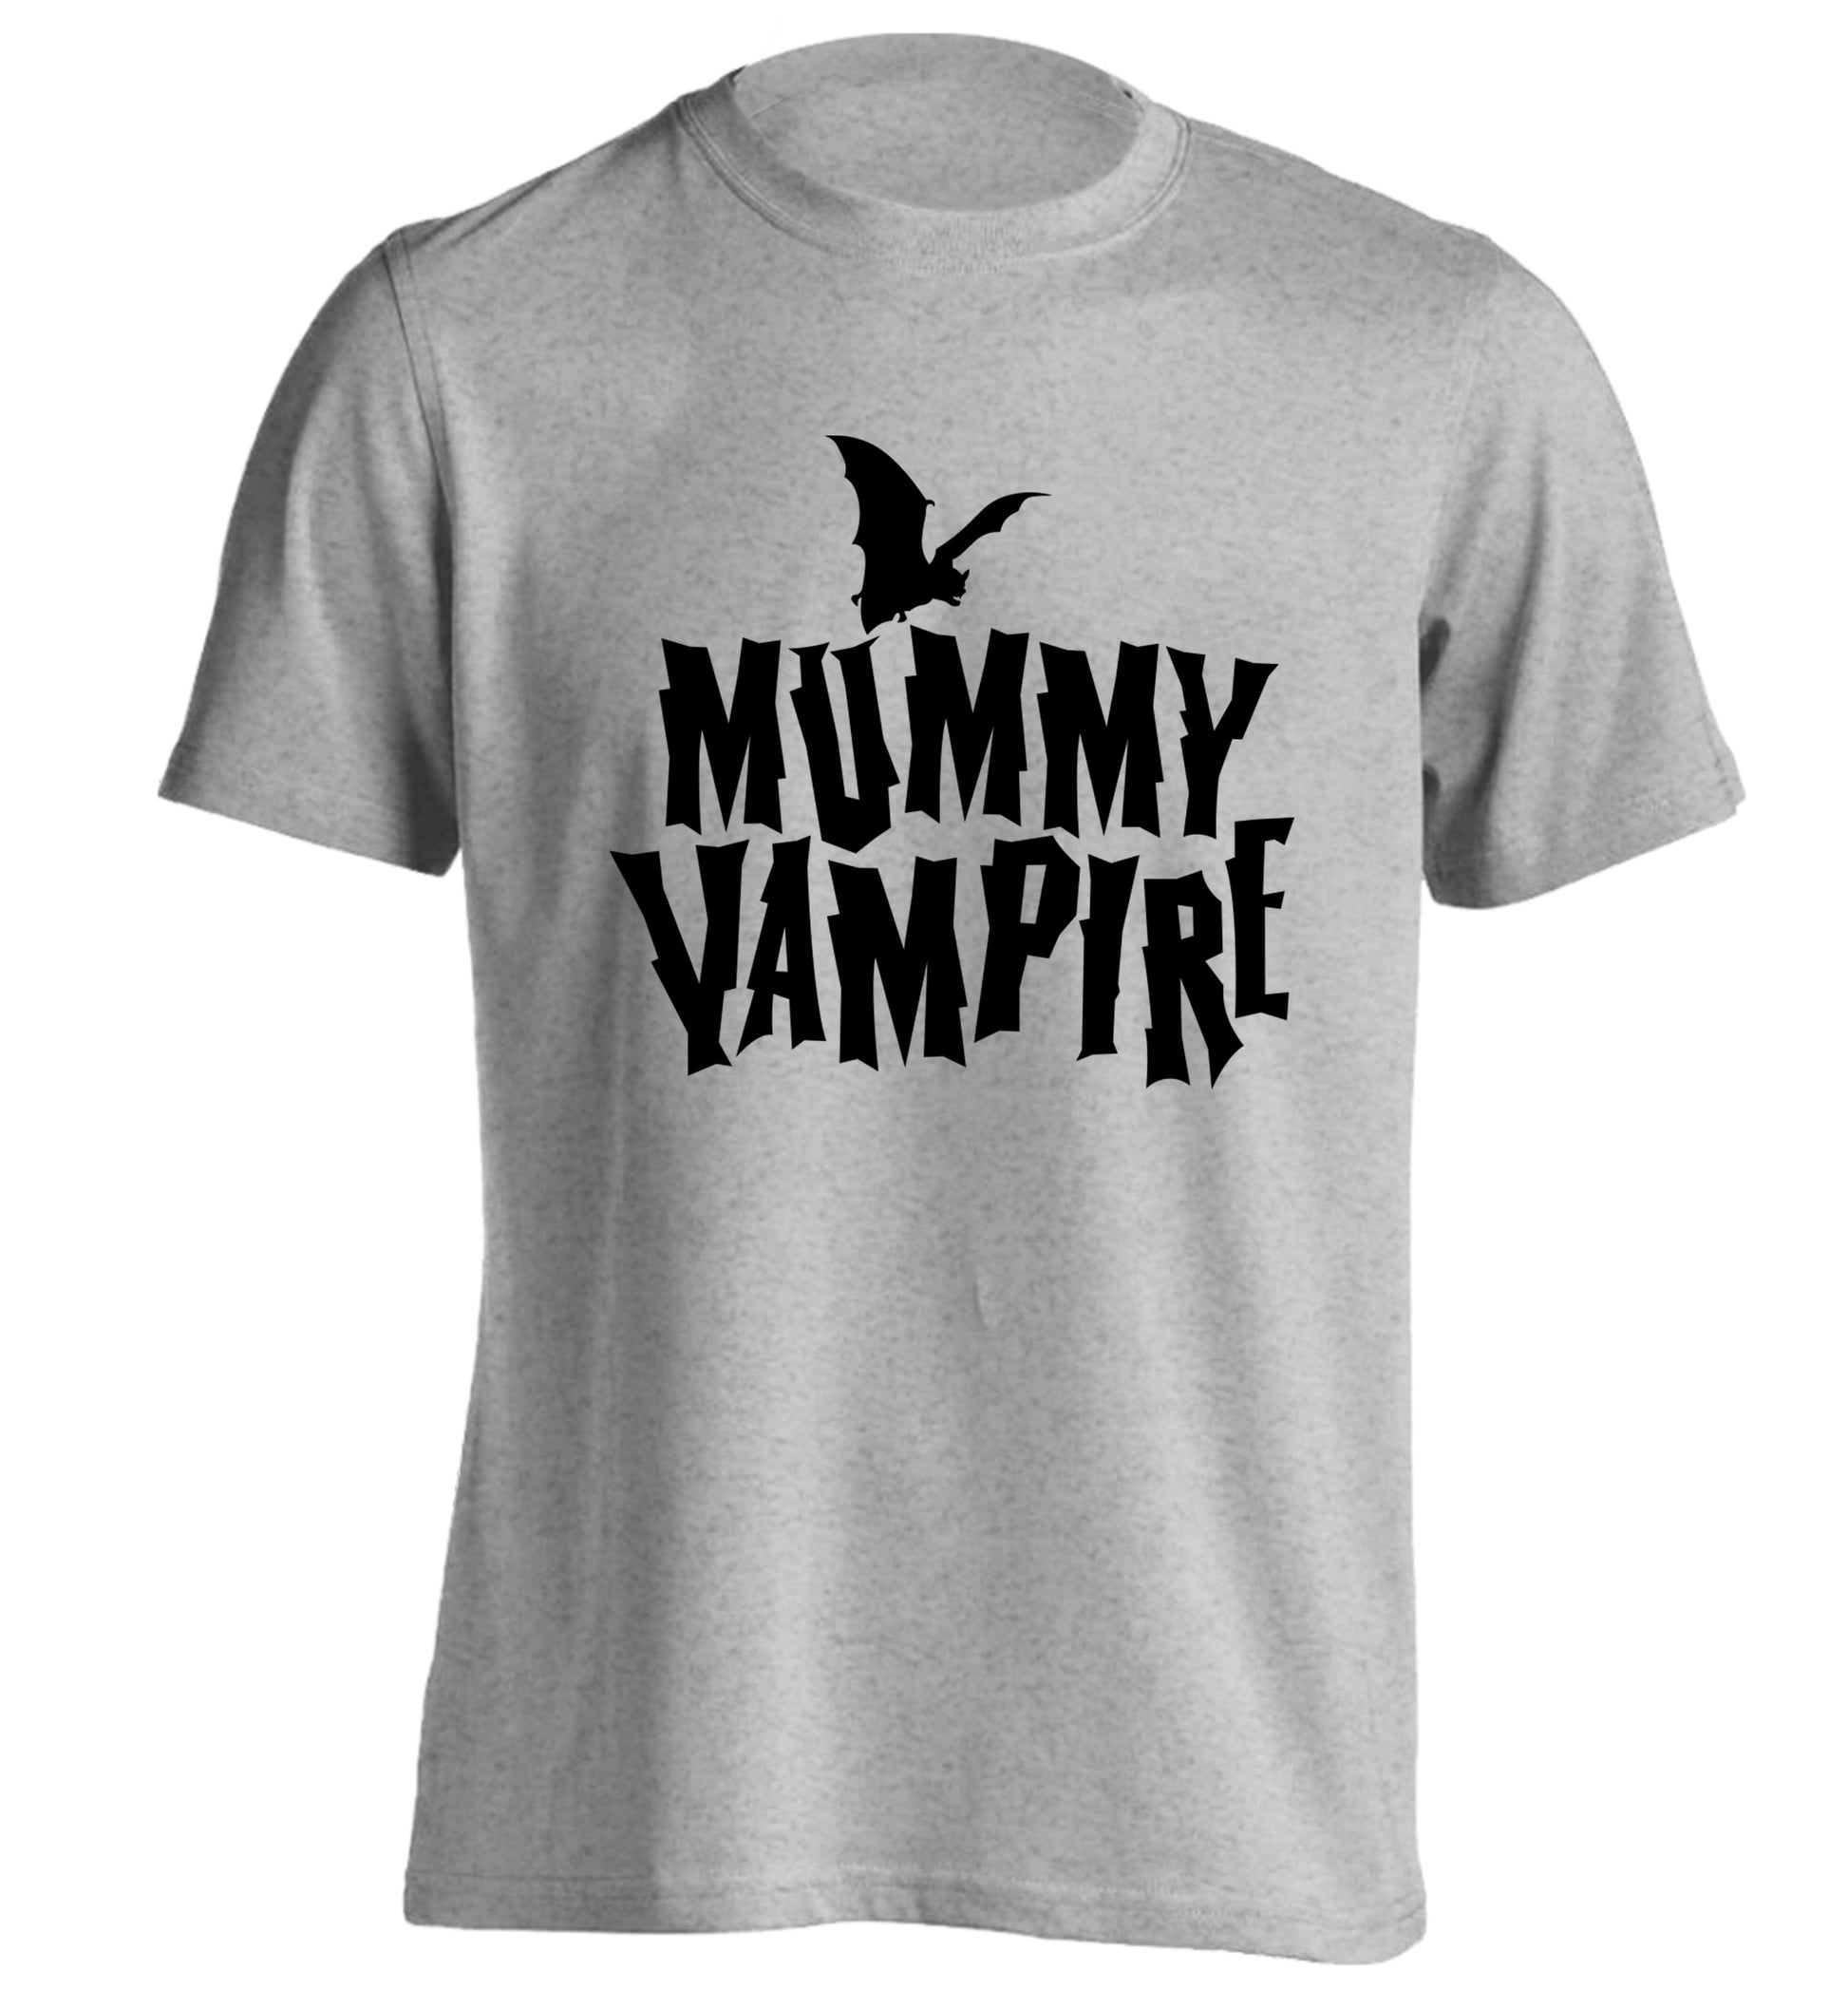 Mummy vampire adults unisex grey Tshirt 2XL